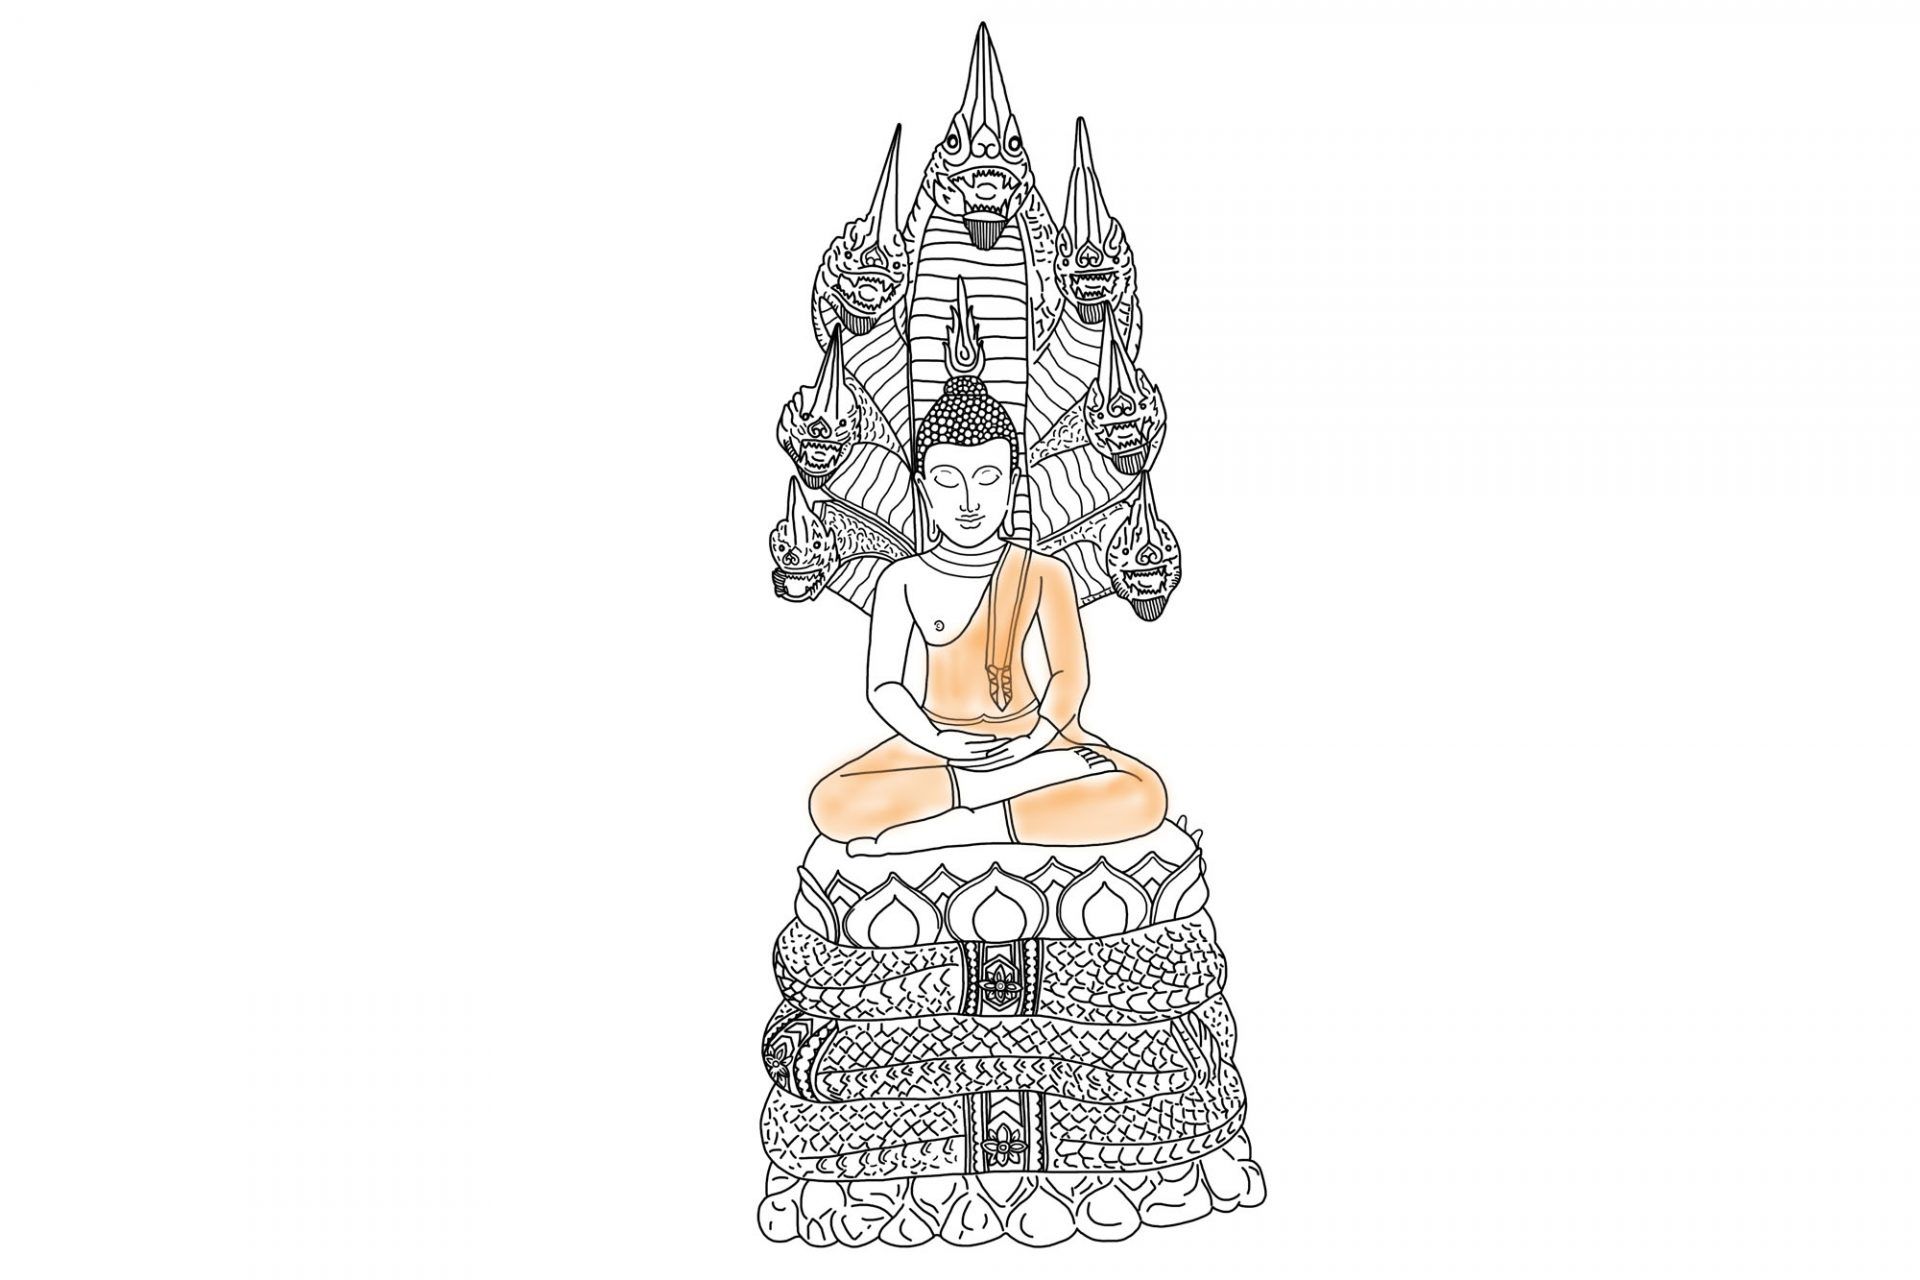 visionthai-42866-buddha-im-seven-days-week-thailand-05-1920x1280.jpg